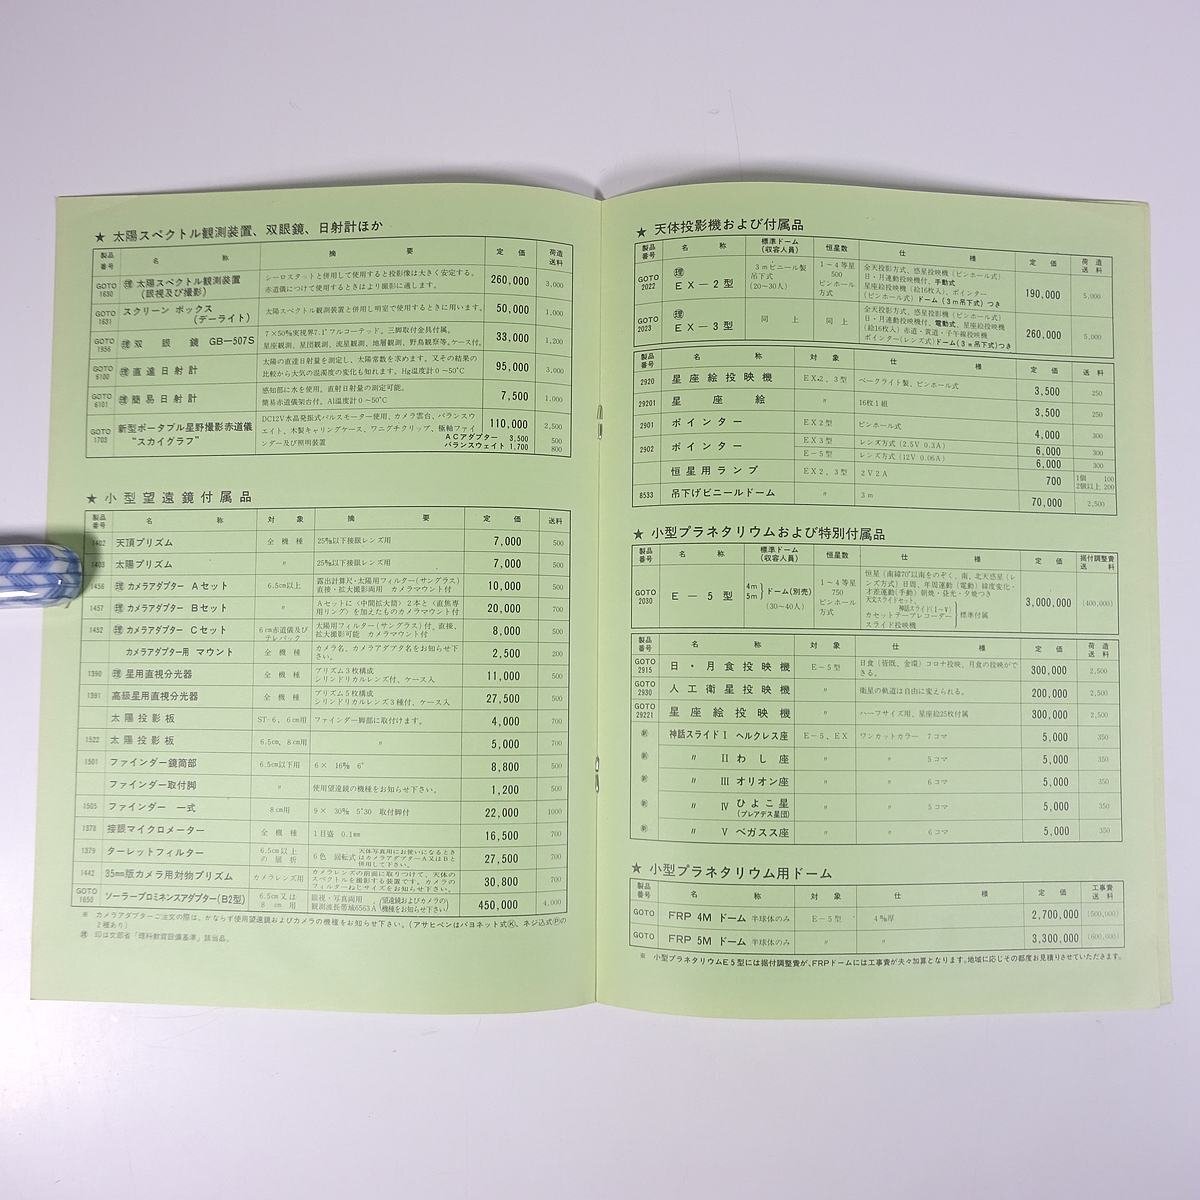 GOTO 天文機器価格表 1986 昭和61年度版 五藤光学研究所 小冊子 カタログ パンフレット 天体望遠鏡 天体観測の画像6